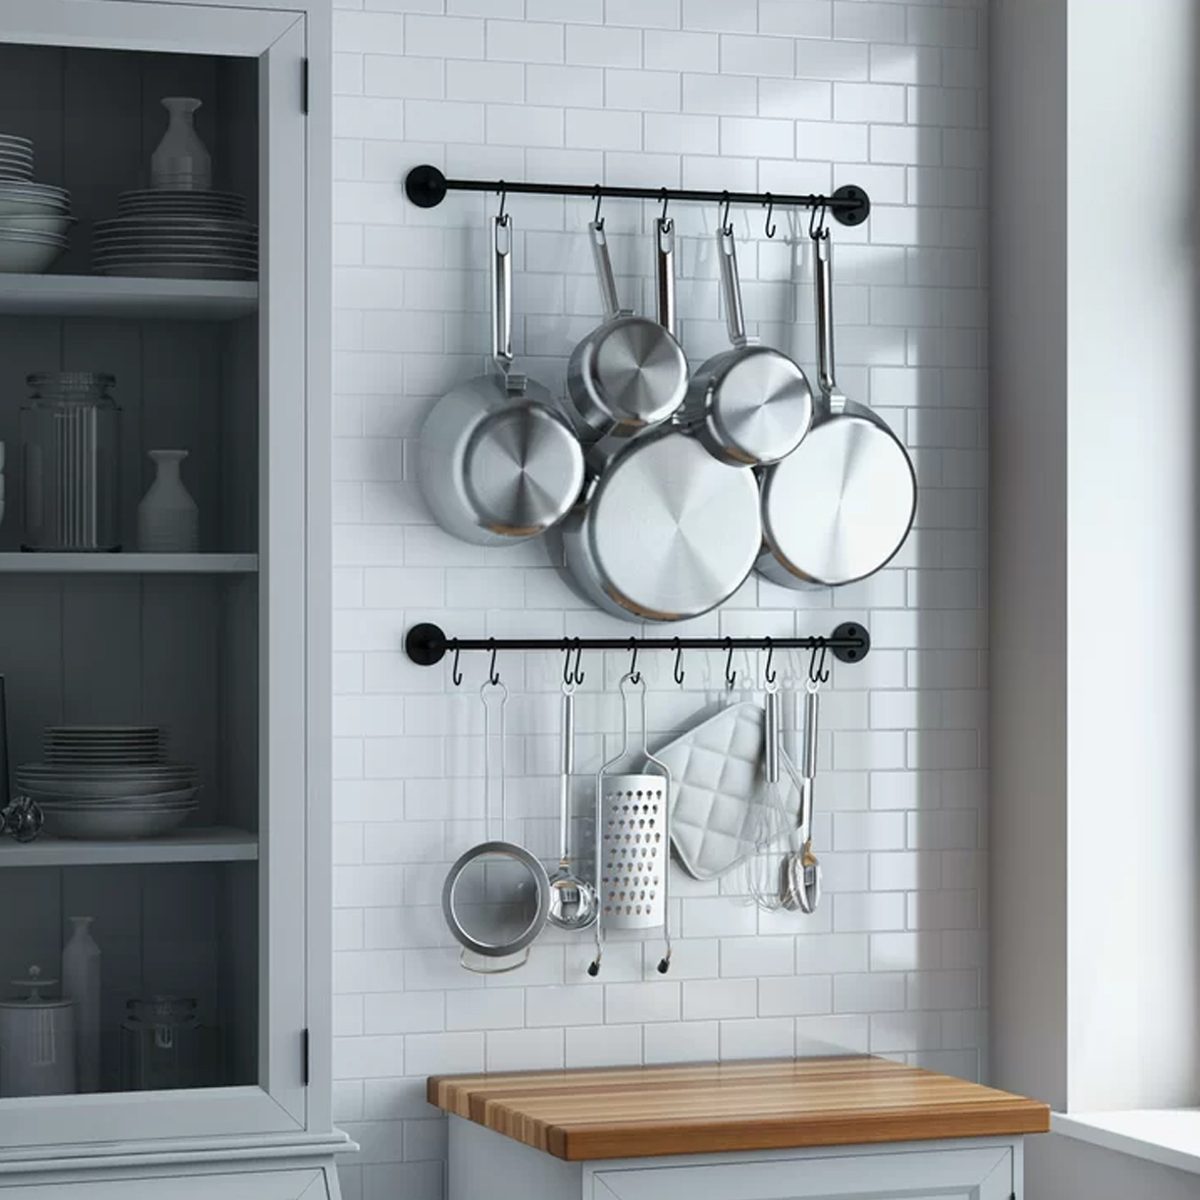 hooks inside cabinets  Hanging pans, Kitchen cabinets upgrade, Home diy